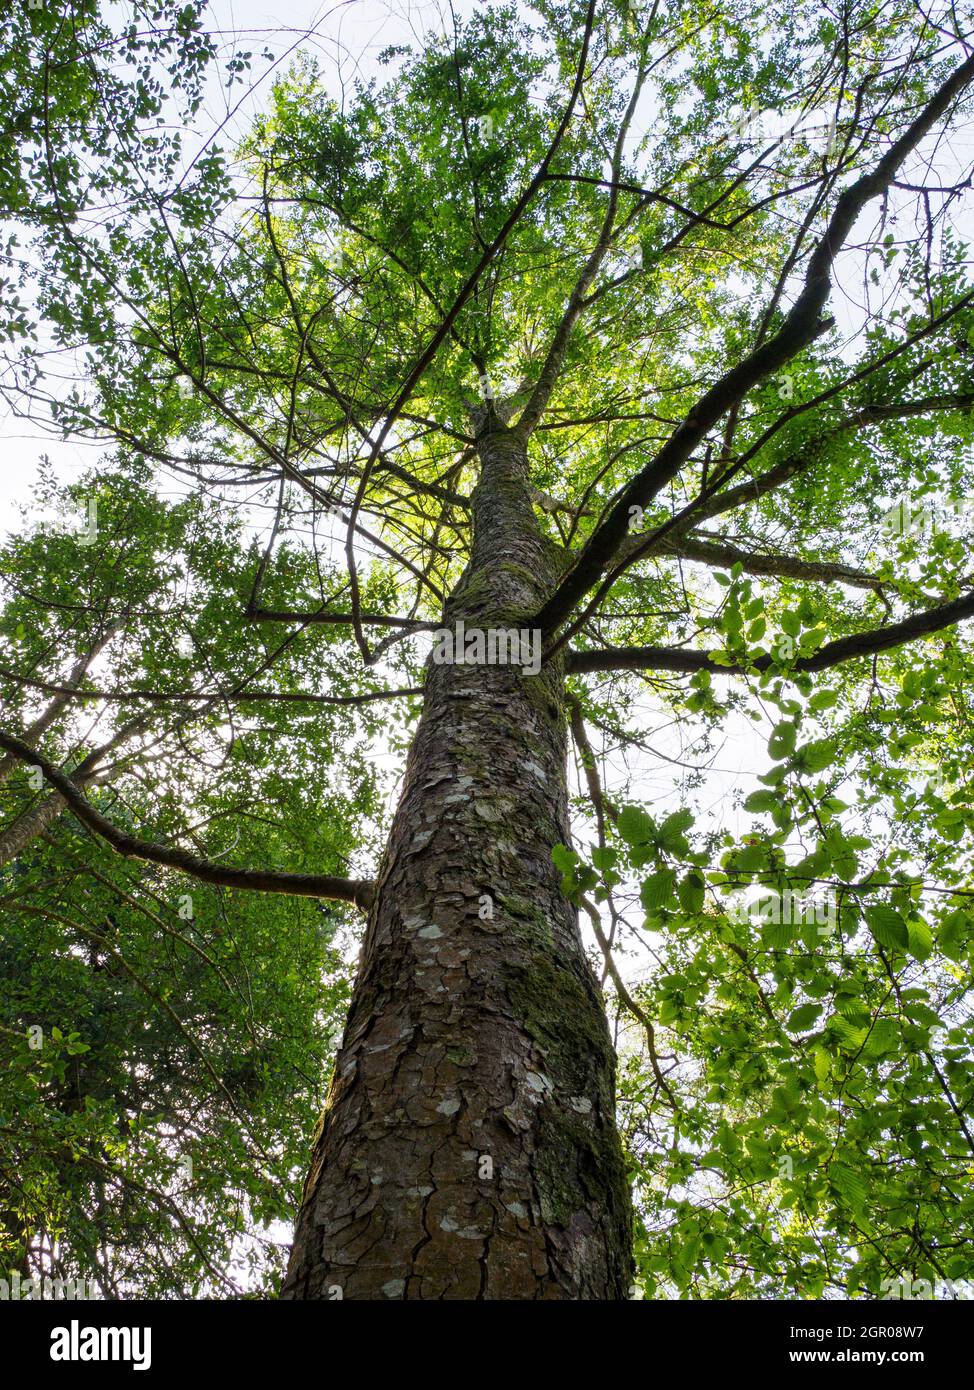 Nothofagus obliqua, Roble Beech tree, Stock Photo